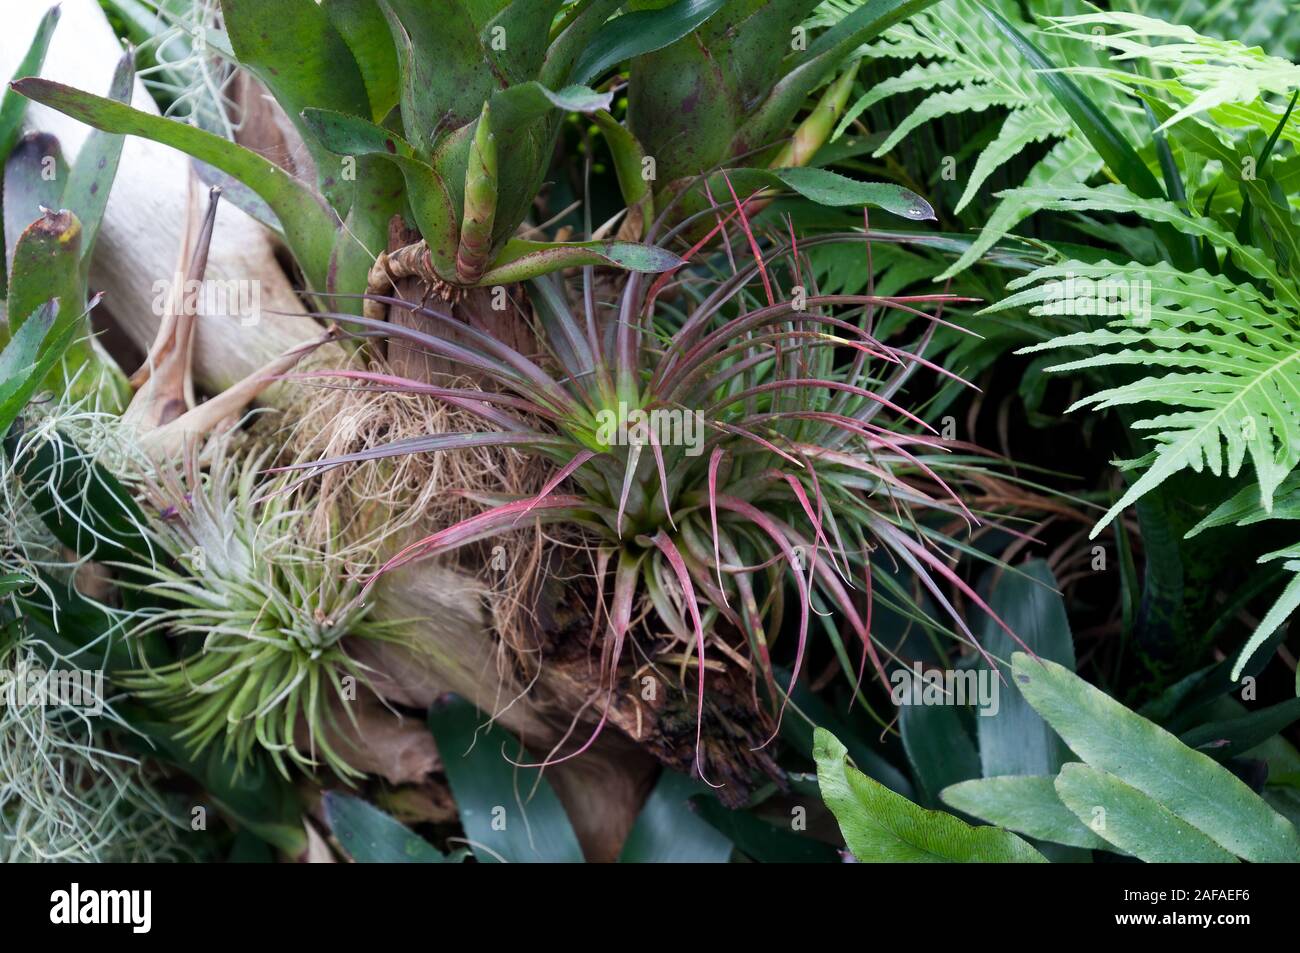 Sydney Australia, various tillandsia airplants in garden Stock Photo